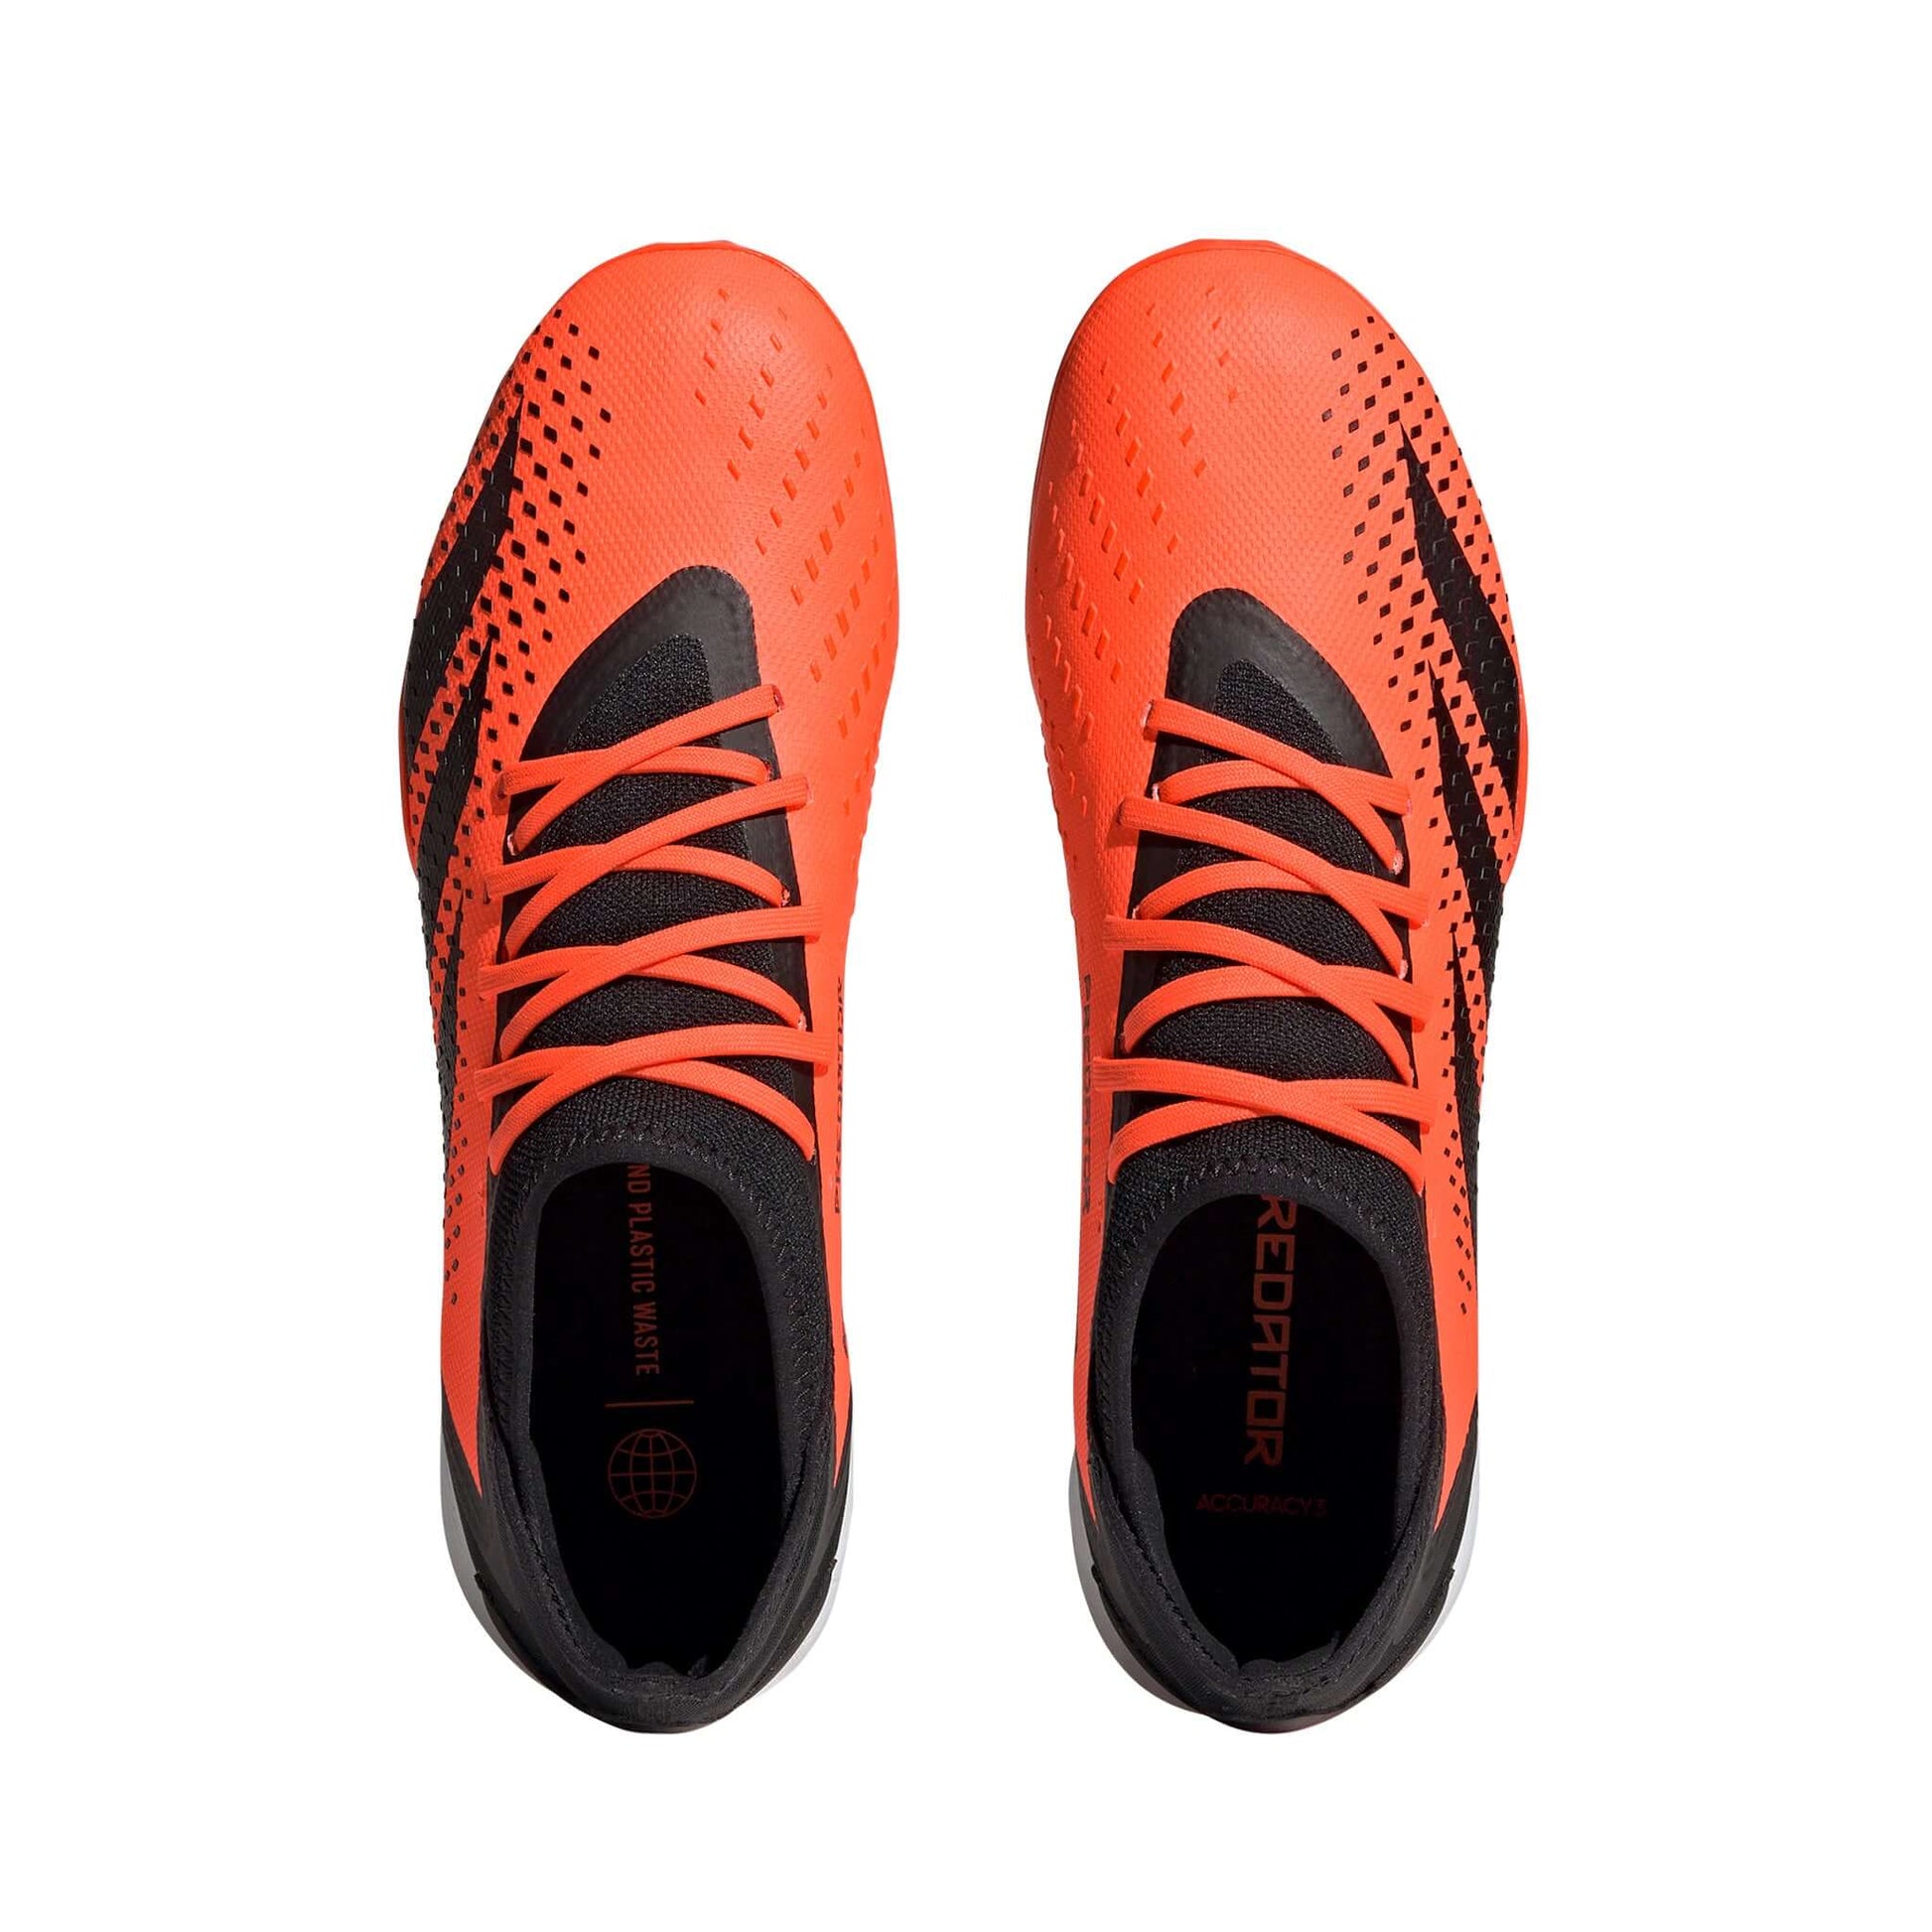 Predator Accuracy.3 Turf Soccer Shoes | EvangelistaSports.com | Canada's Premiere Soccer Store